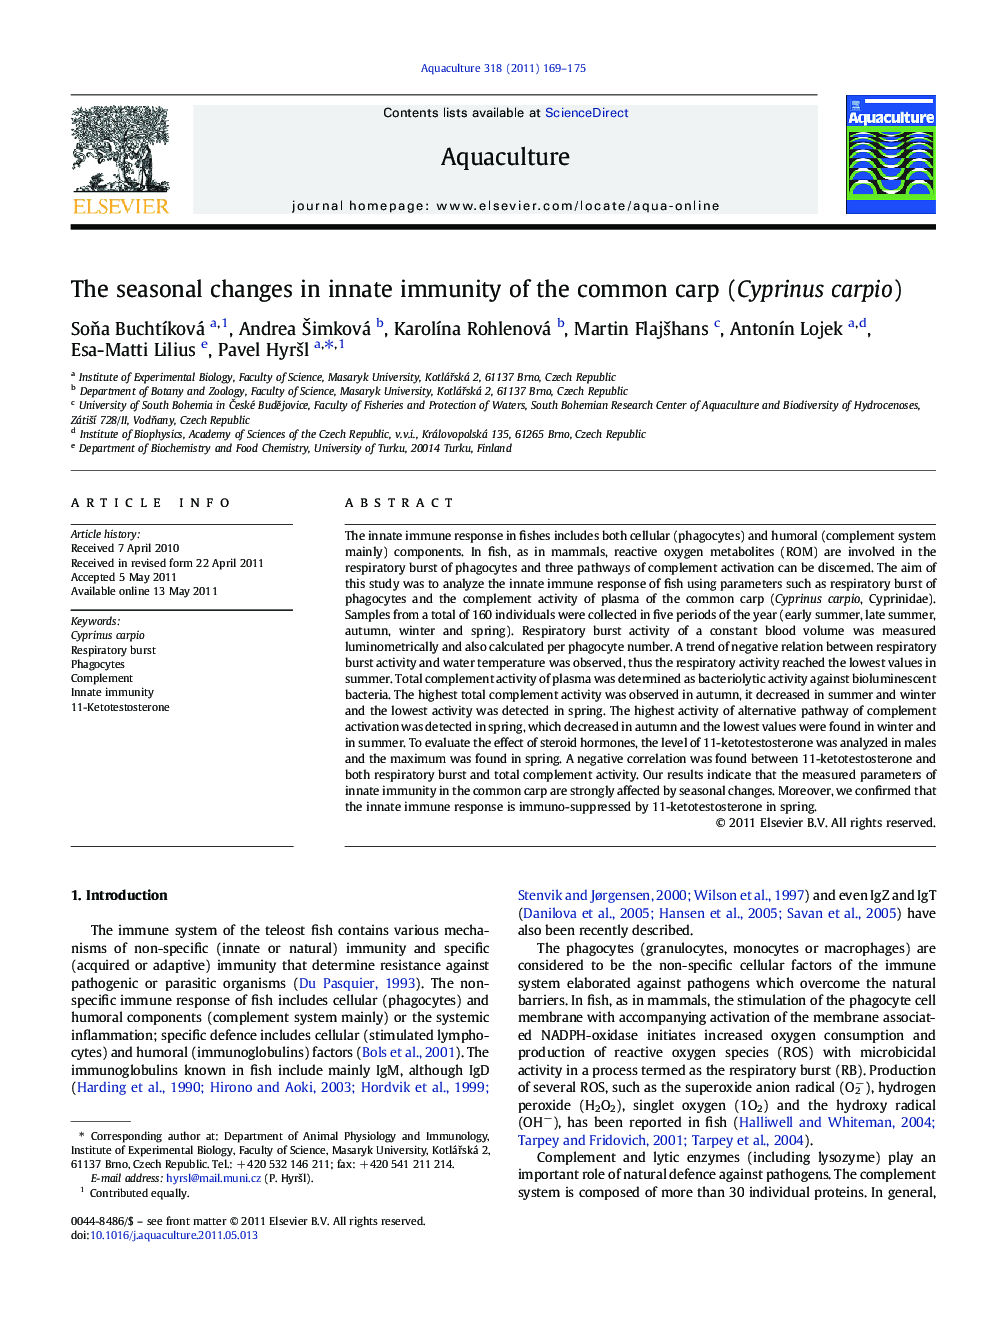 The seasonal changes in innate immunity of the common carp (Cyprinus carpio)